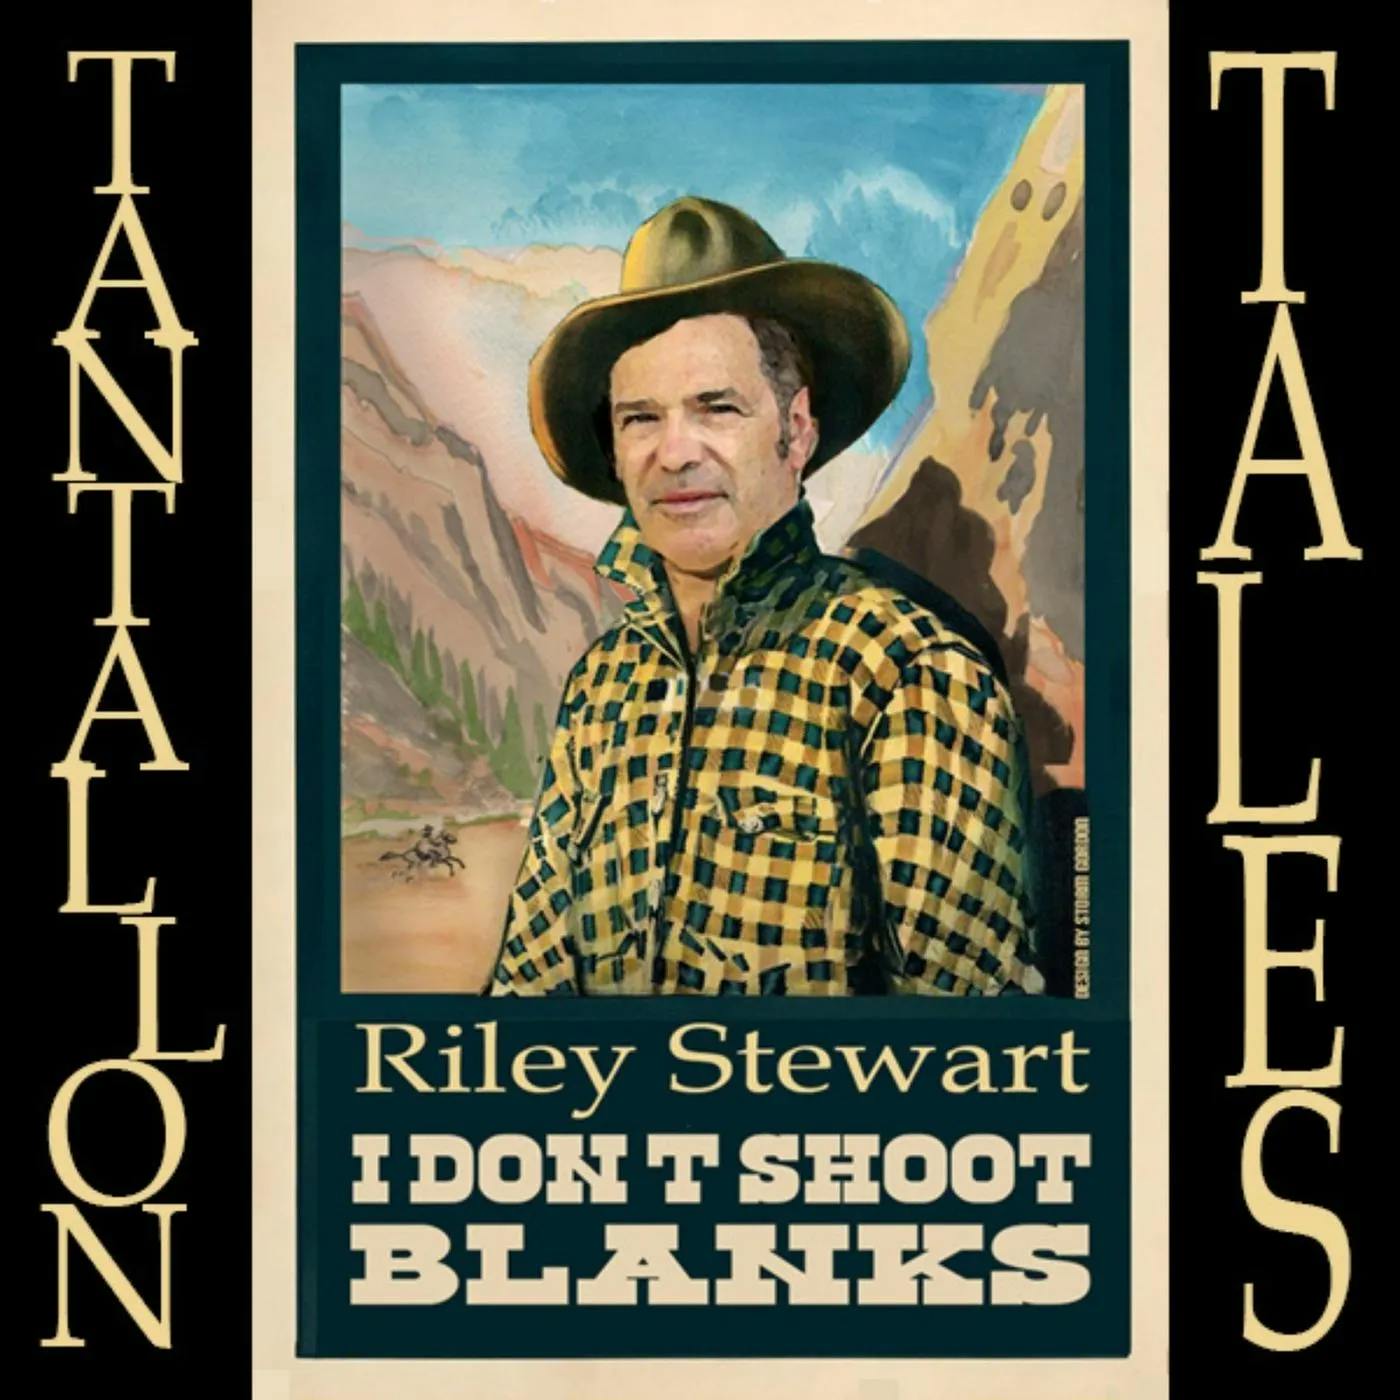 Cover art for Tantallon Tales